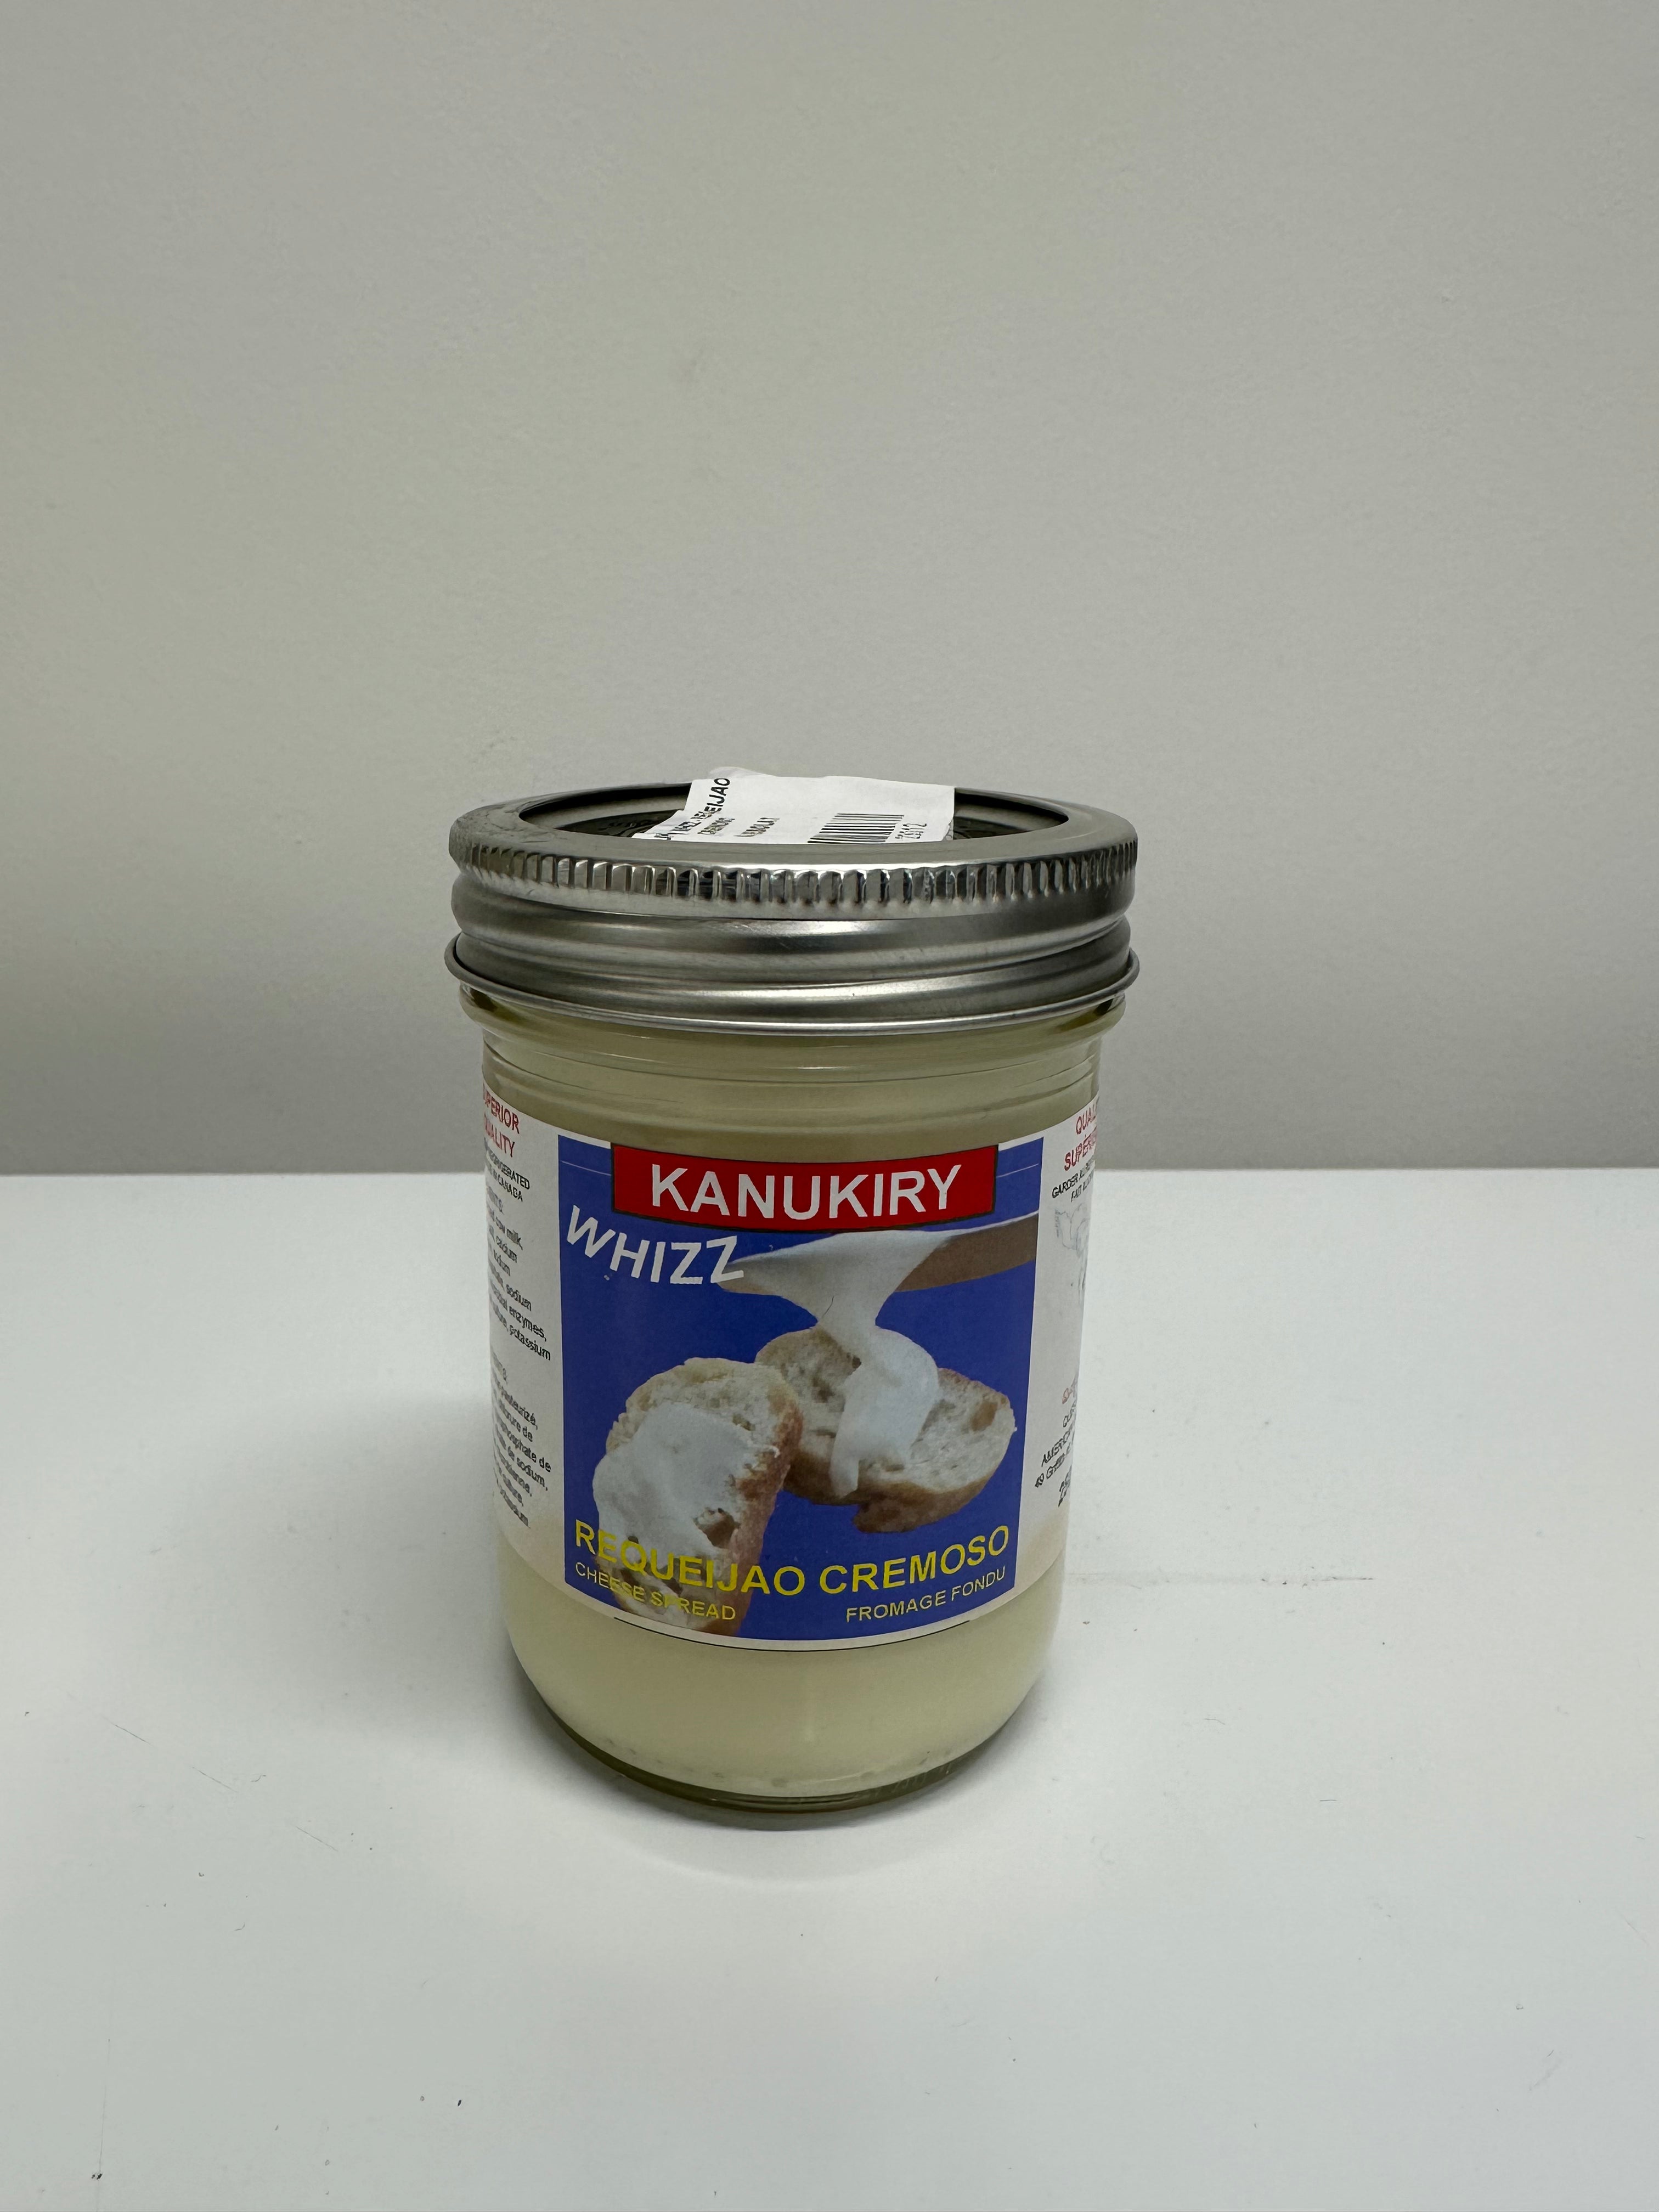 QUESOLAT - Kanukiry Whizz (Cheese Spread) 250ml